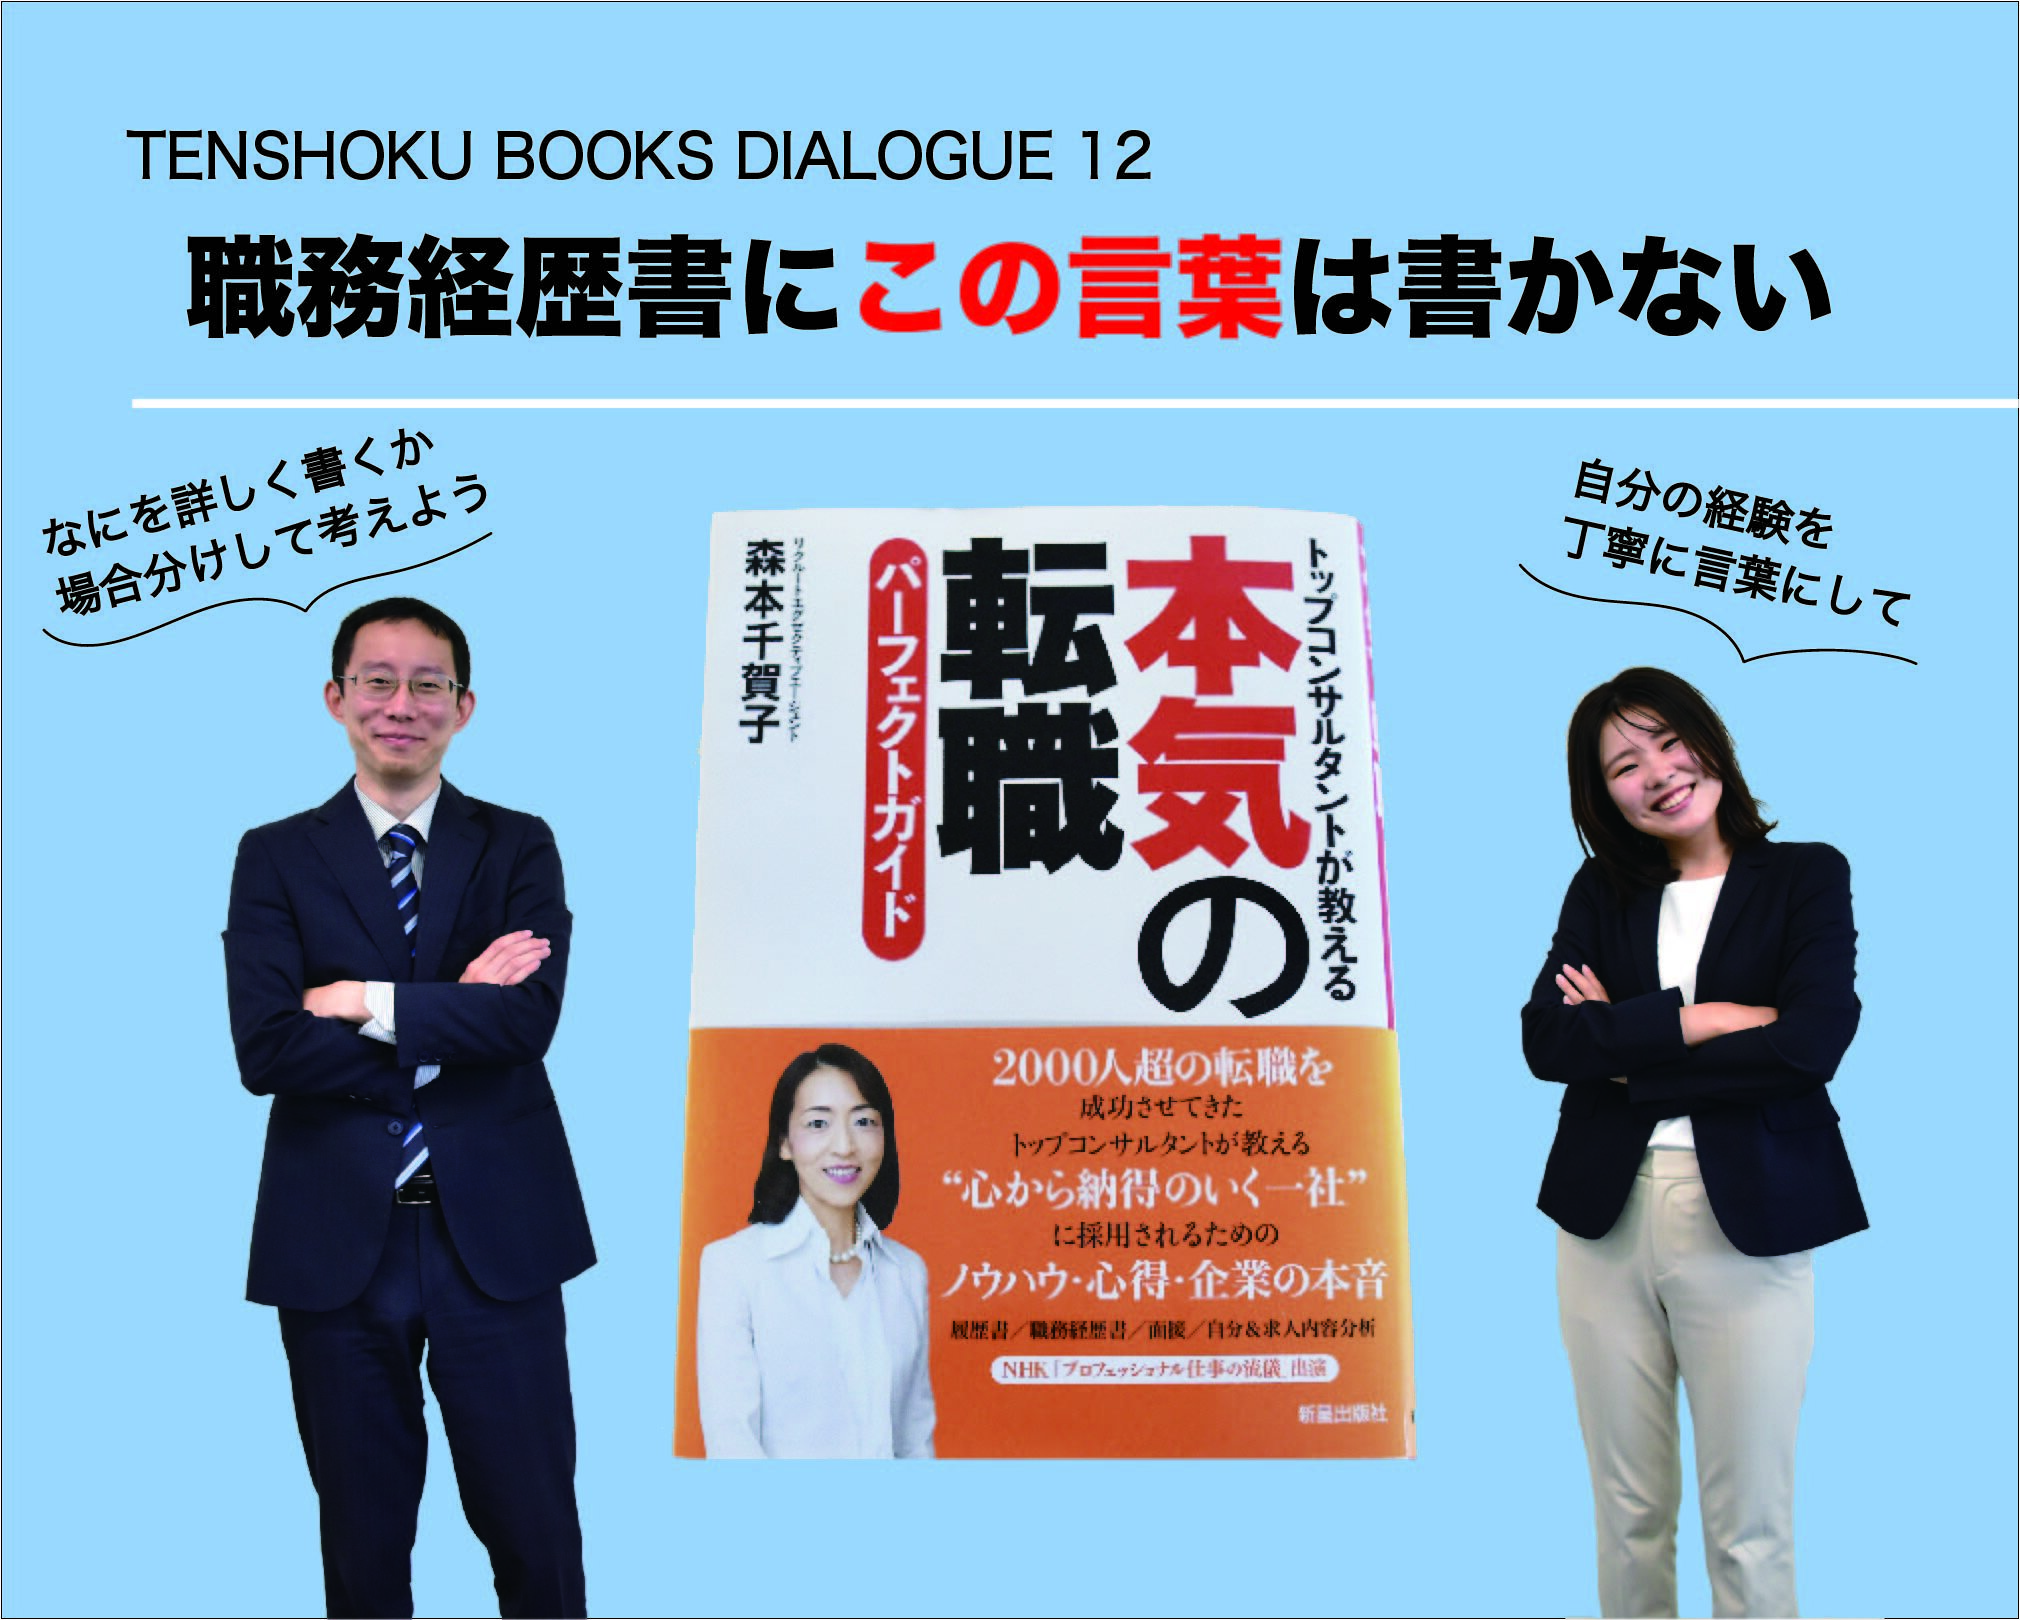 【TENSHOKU BOOKS DIALOGUE12】 『本気の転職パーフェクトガイド』から考える職務経歴のまとめ方